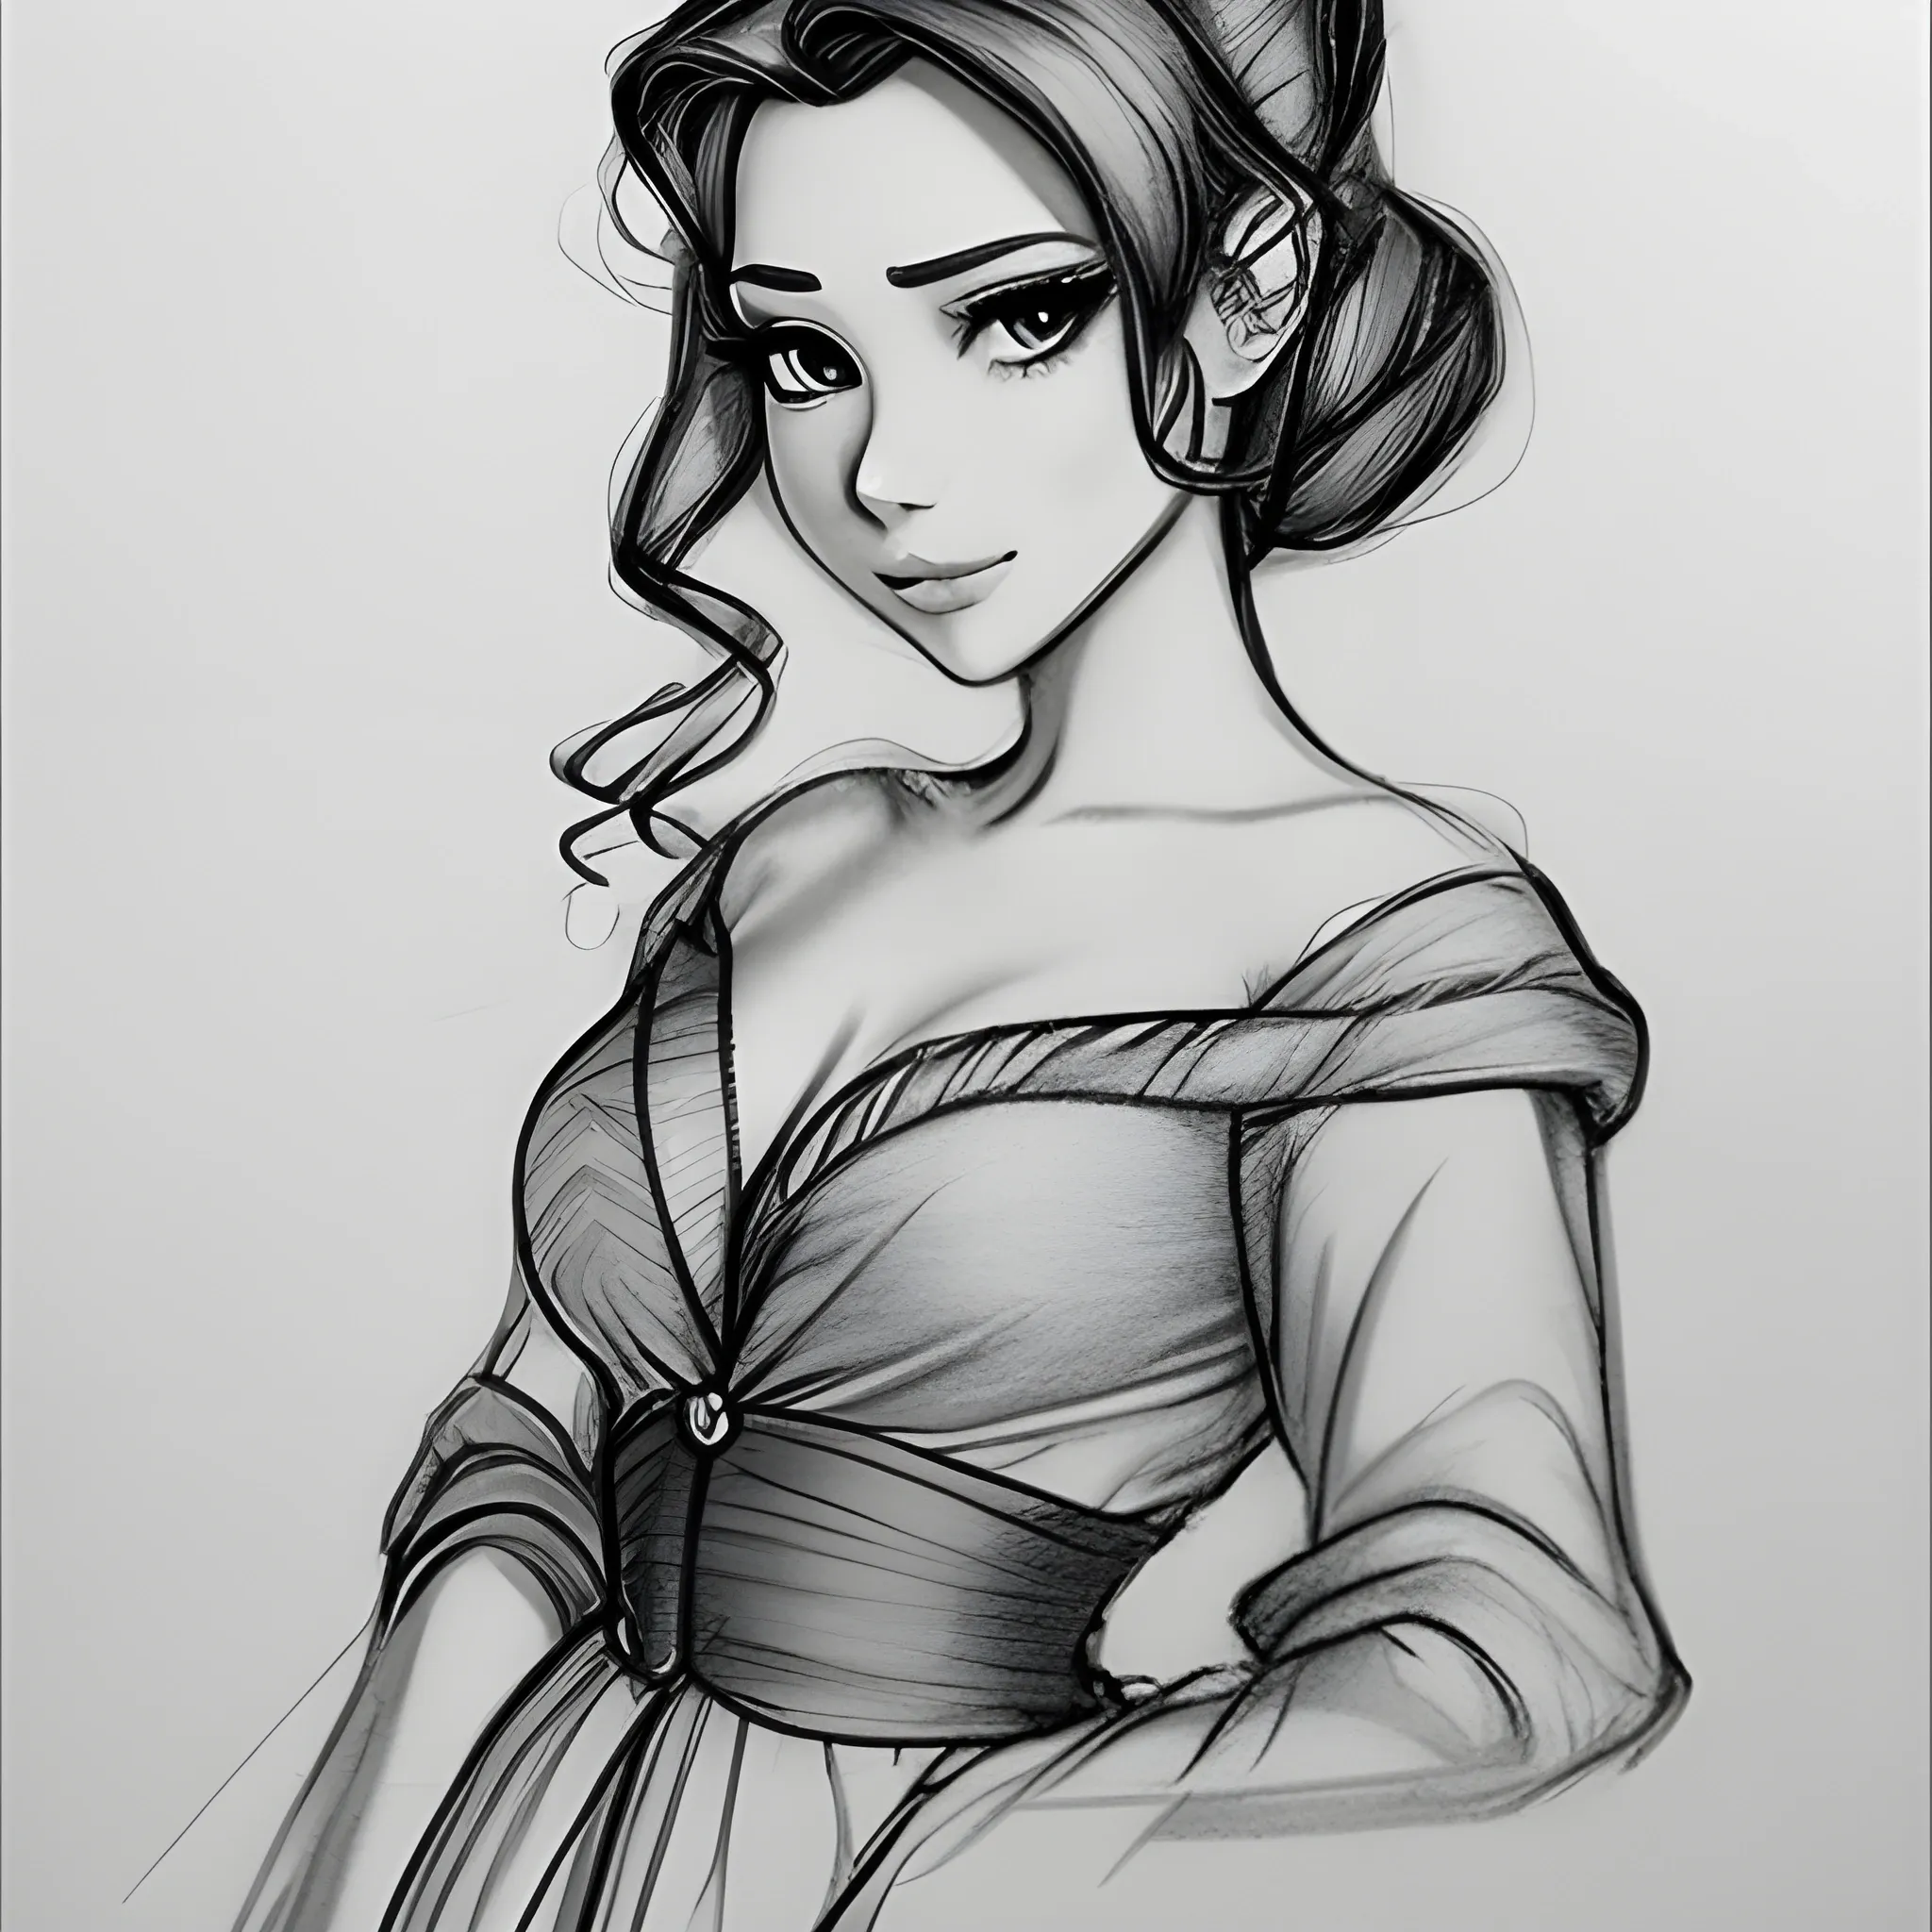 How to draw Princess Sofia - Sketchok easy drawing guides